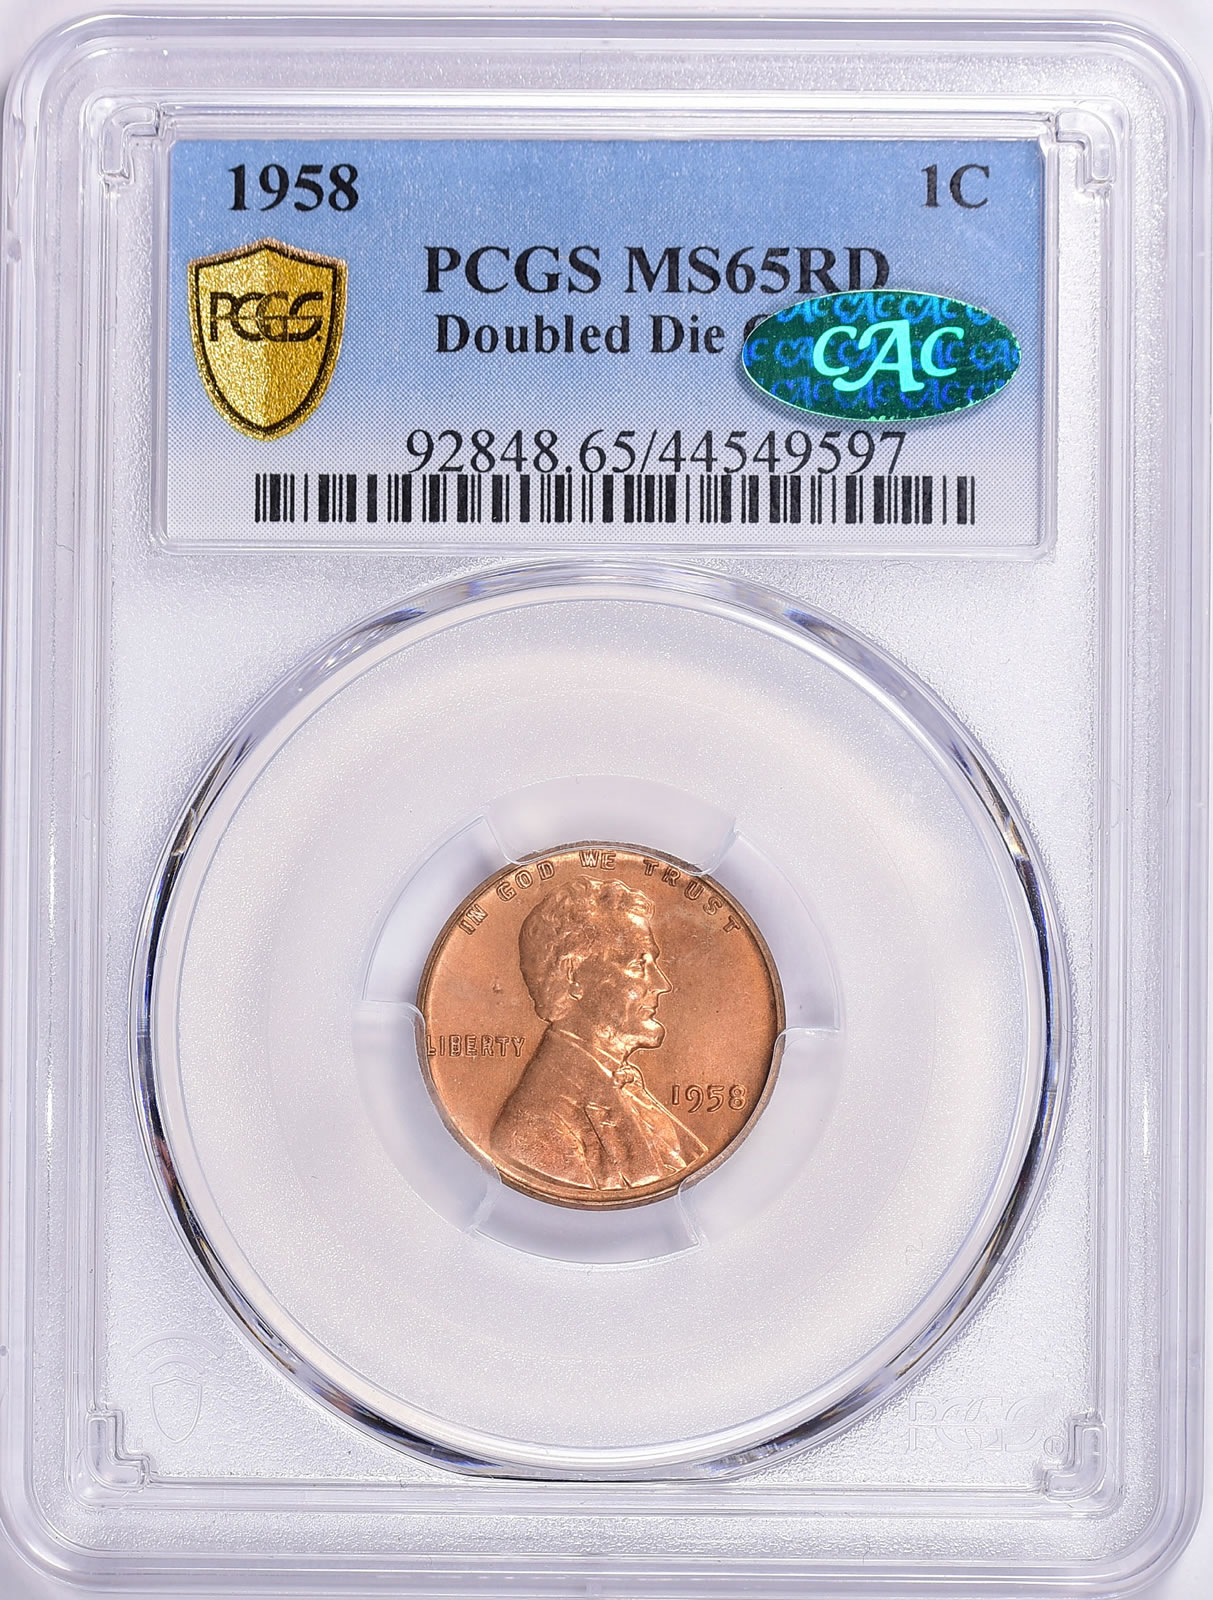 U.S. Mint recovers 1974-D aluminum cent - Numismatic News